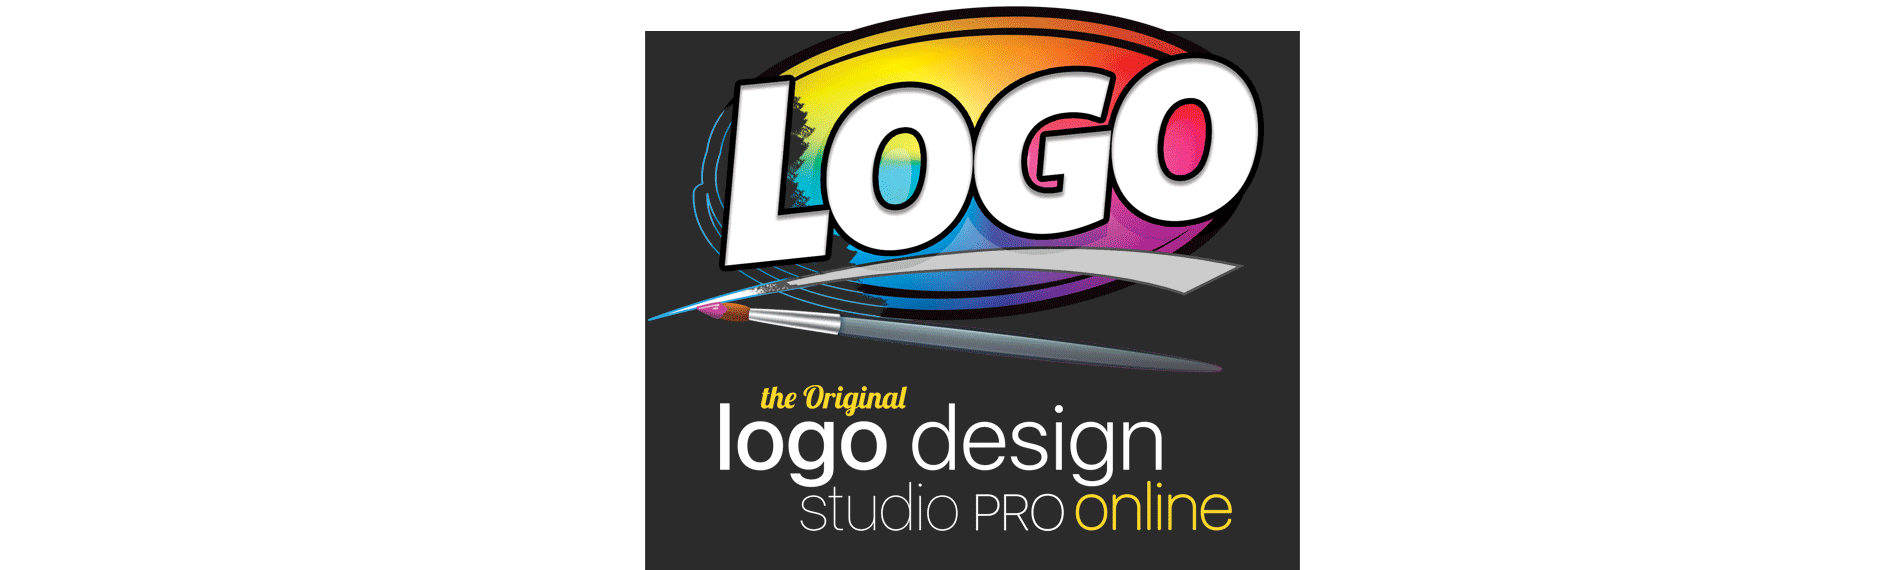 logo design studio pro denied permission